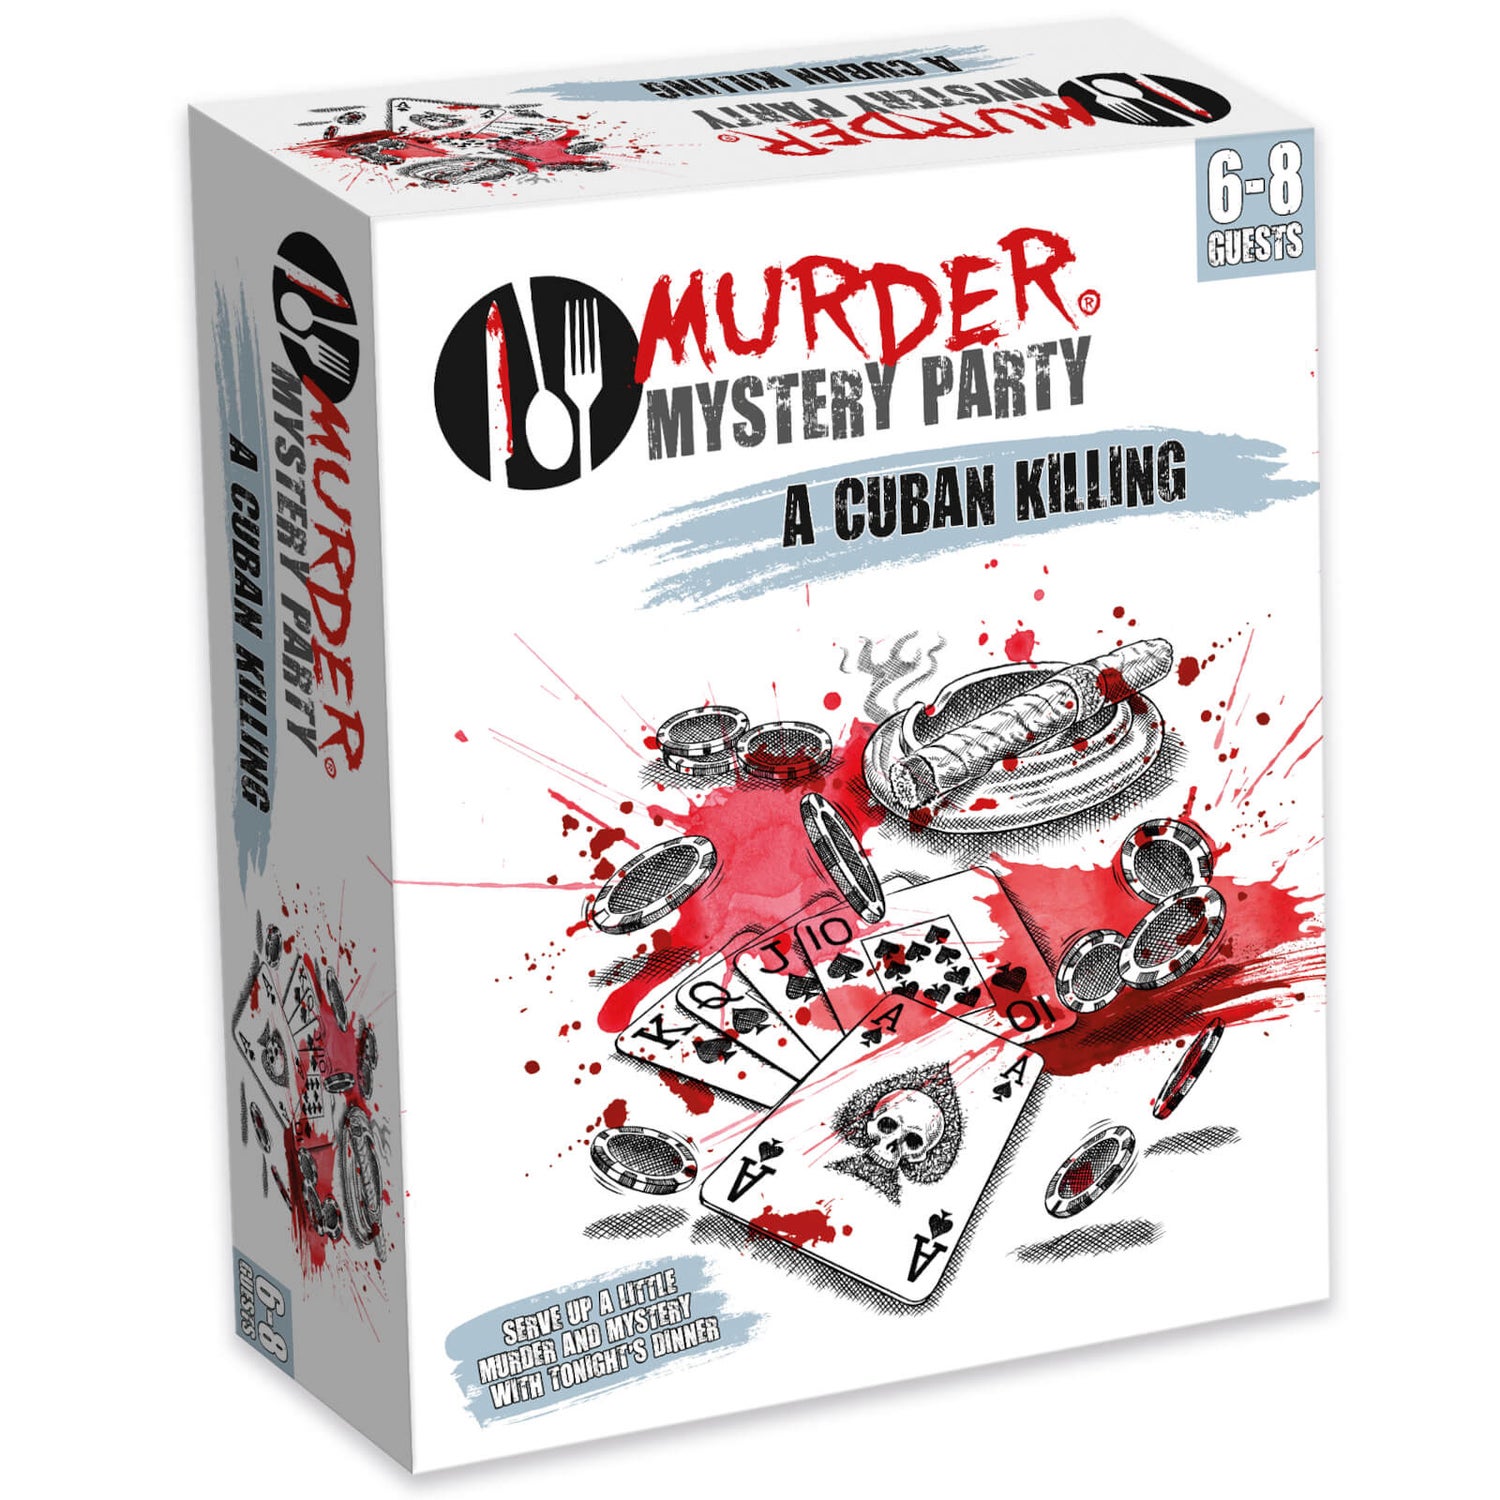 Cuban Killing Interactive DVD Game (6-8 Players)